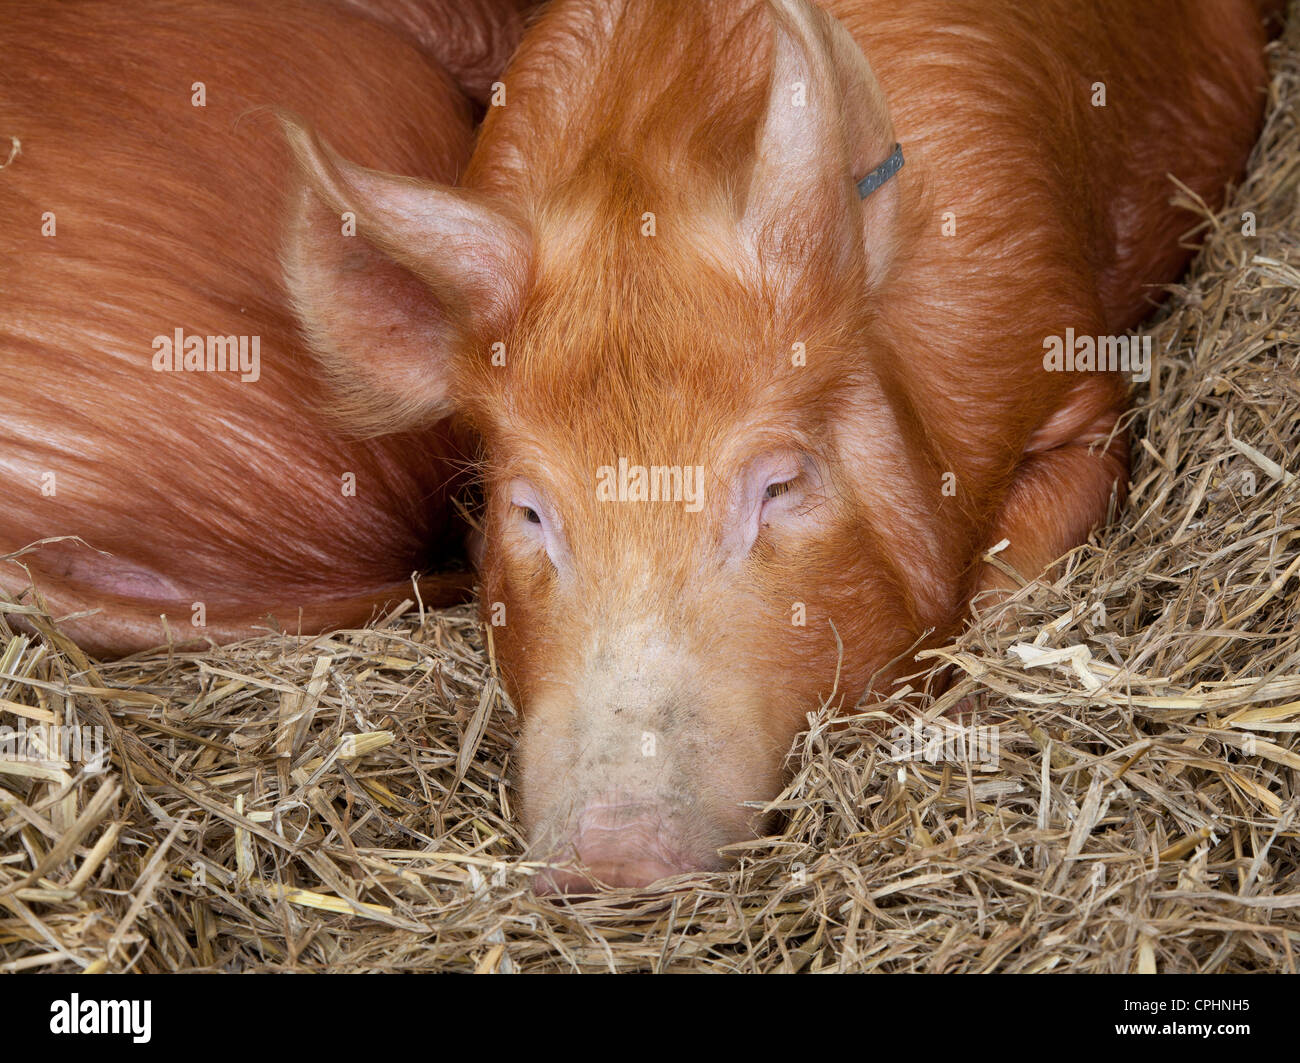 Sleepy cochon dans barn Banque D'Images